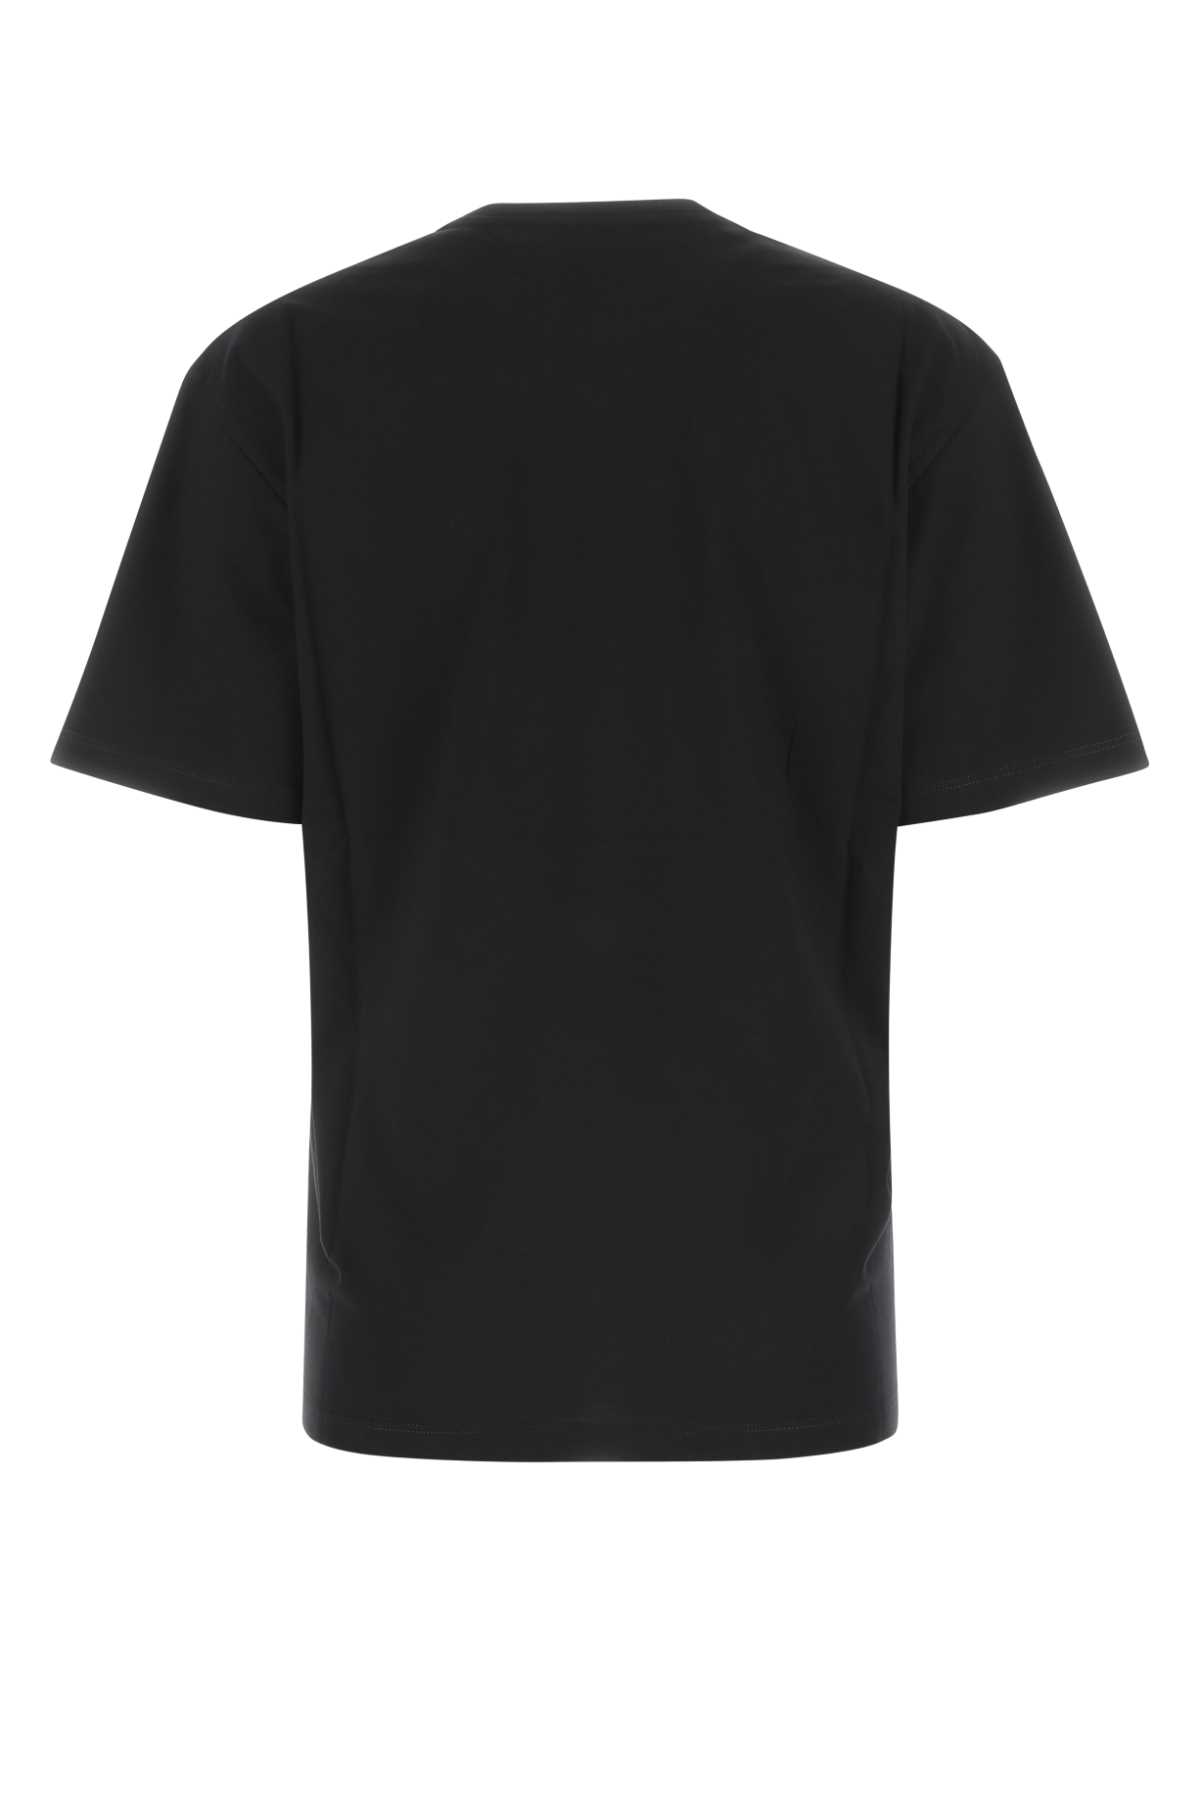 Alexander Mcqueen Black Cotton T-shirt In 0520